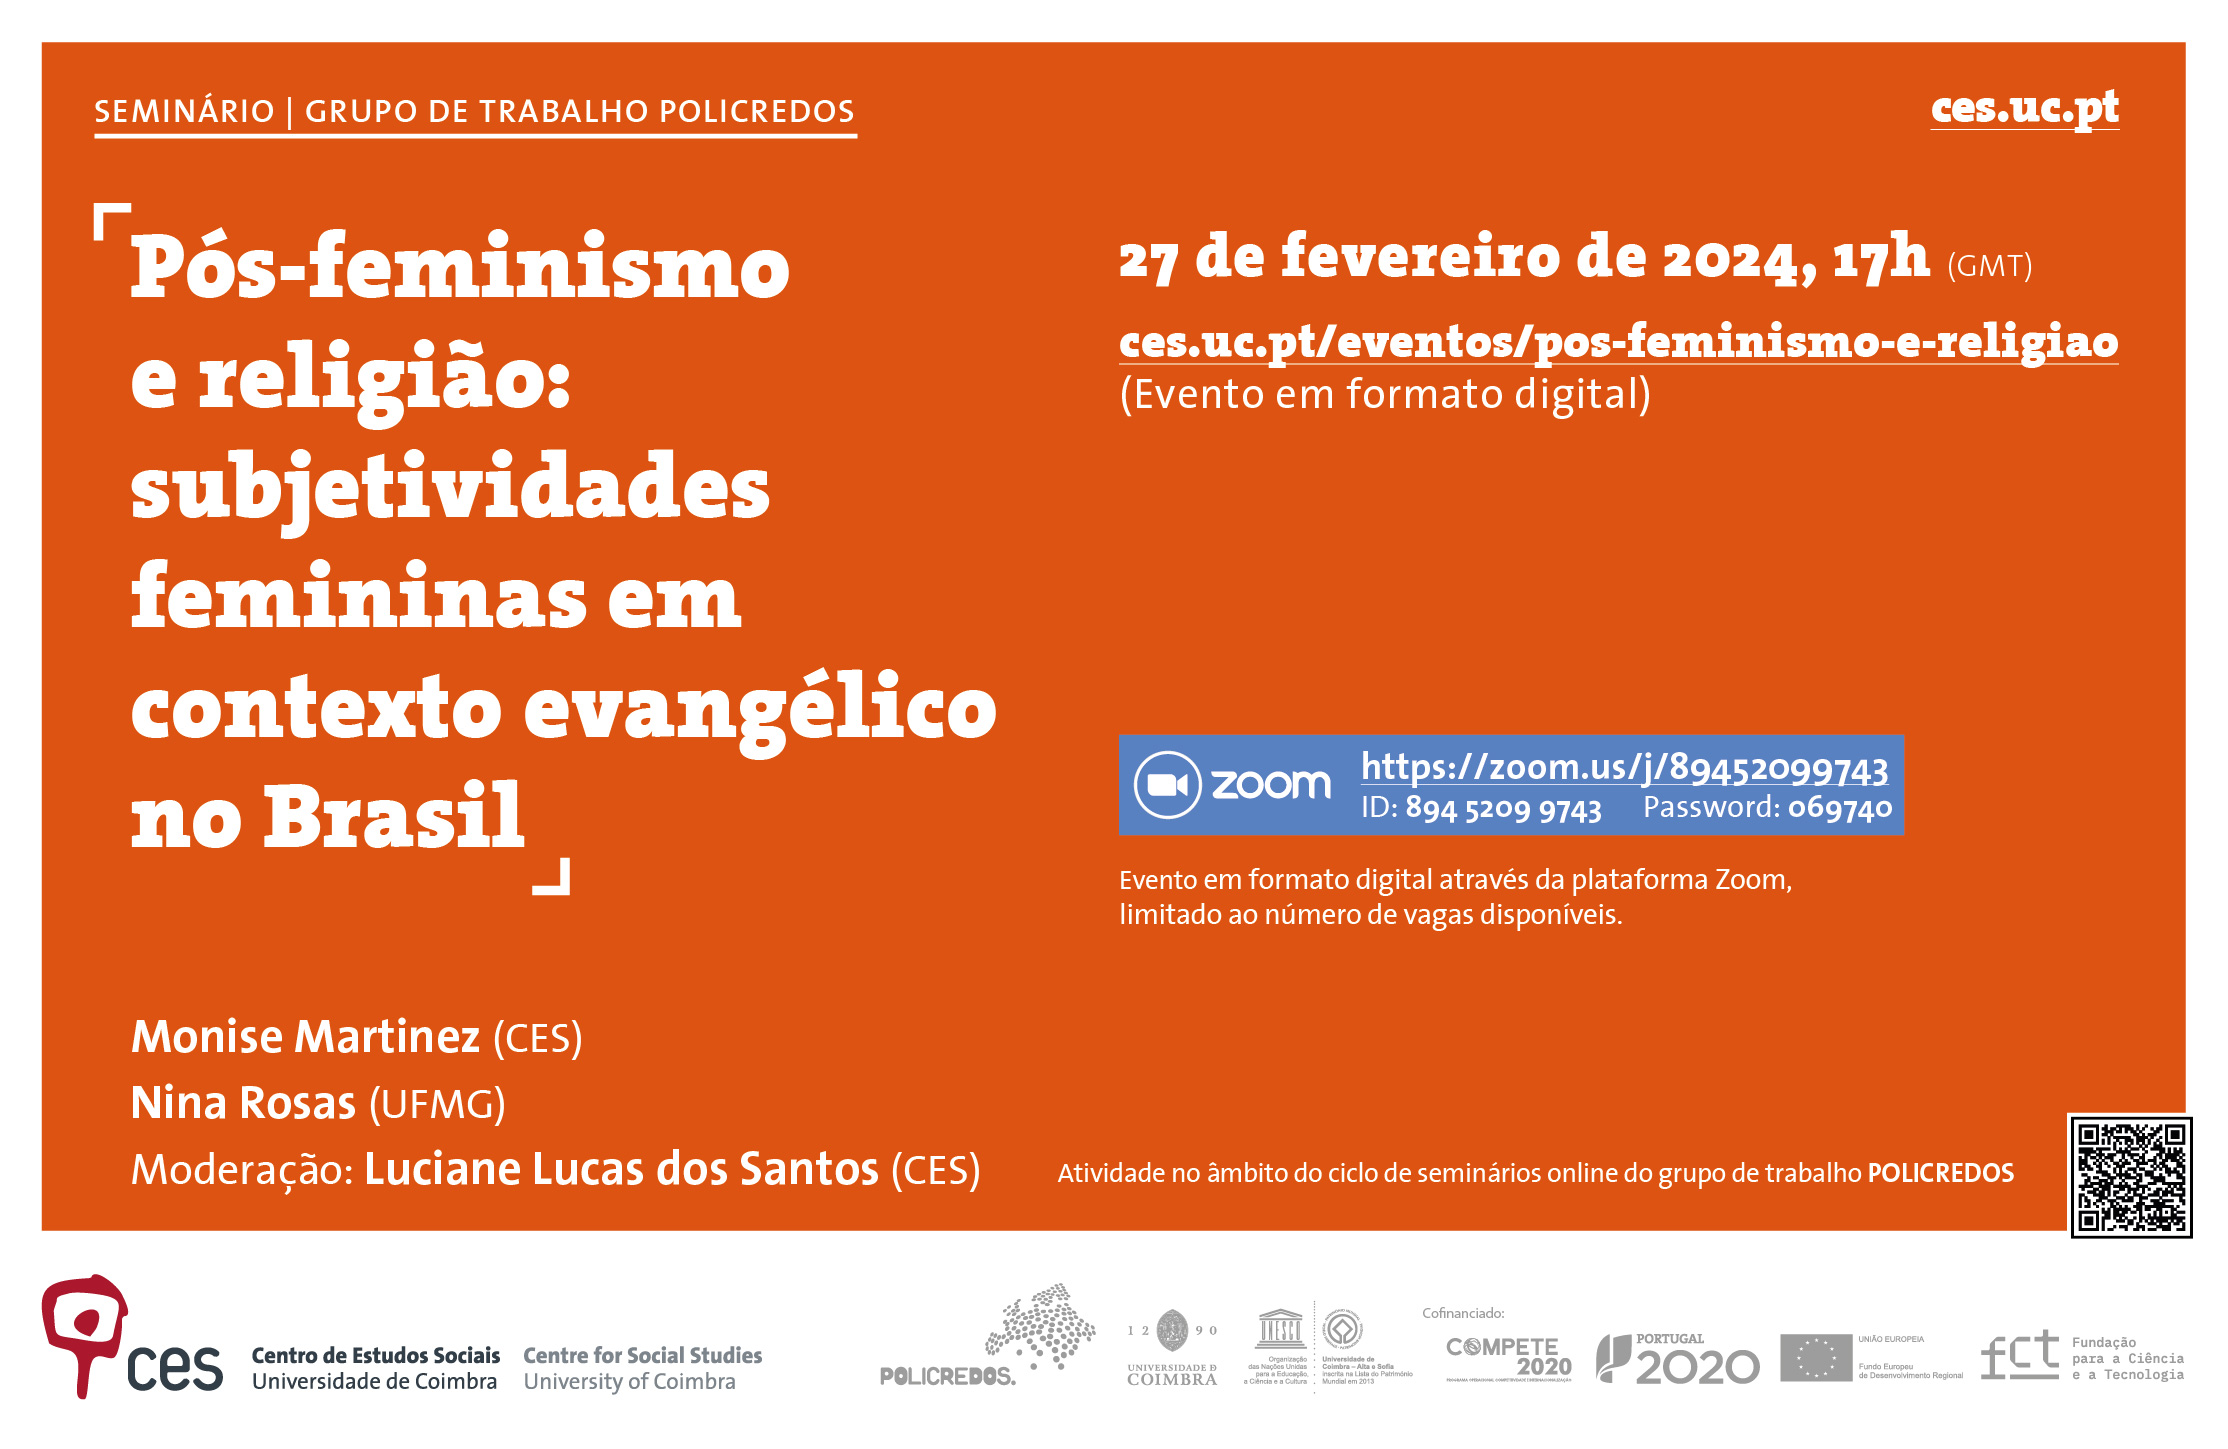 Pós-feminismo e religião: subjetividades femininas em contexto evangélico no Brasil<span id="edit_45032"><script>$(function() { $('#edit_45032').load( "/myces/user/editobj.php?tipo=evento&id=45032" ); });</script></span>